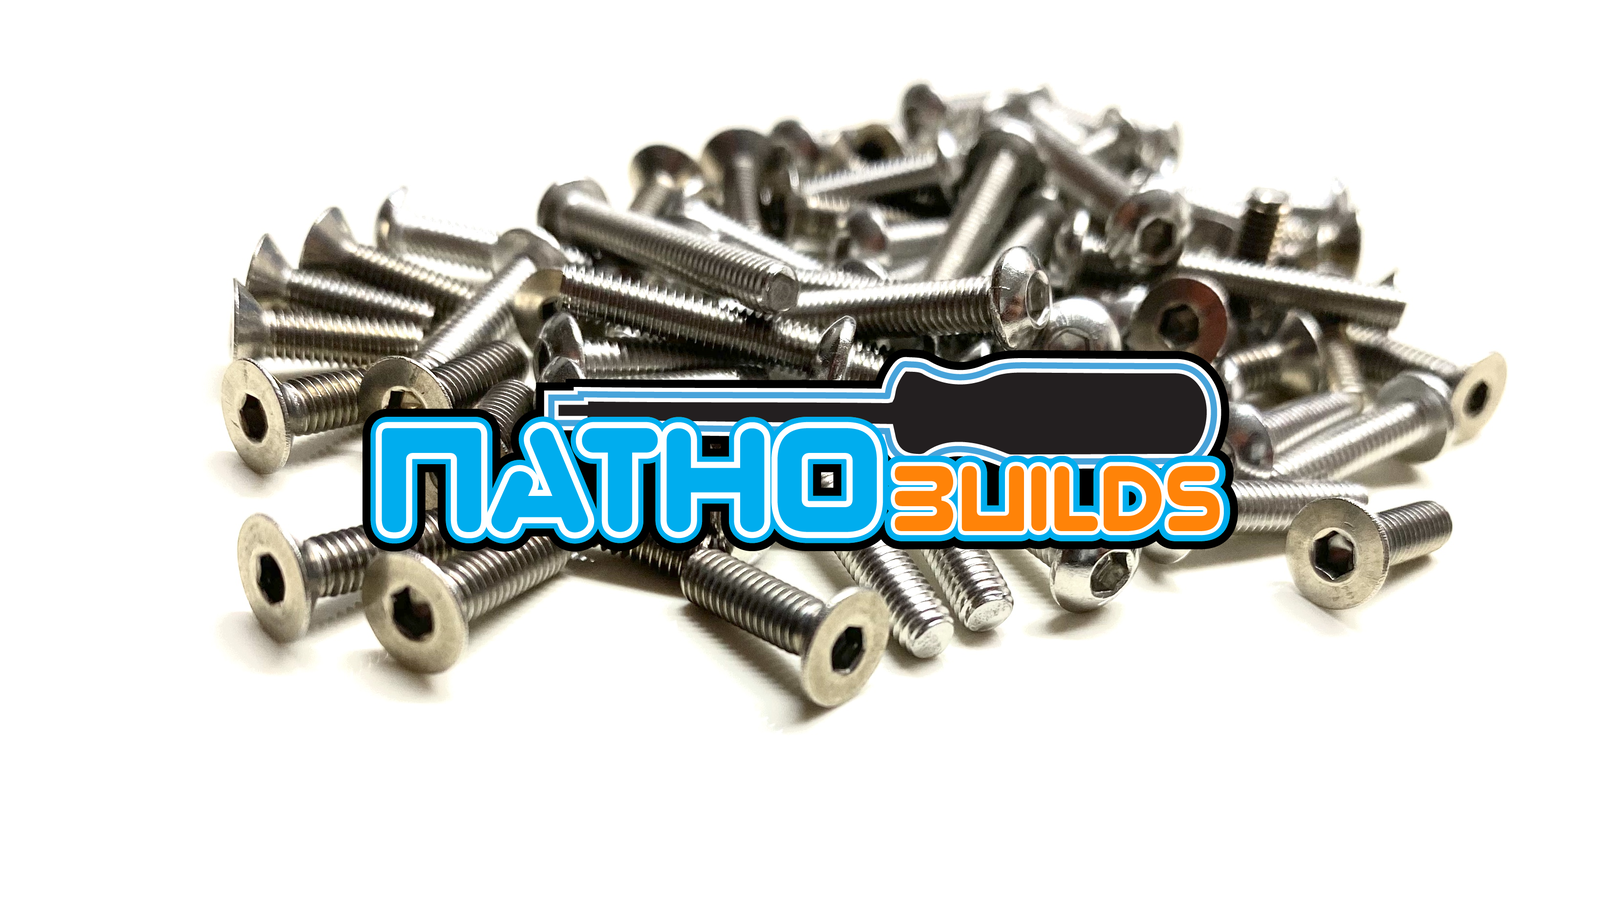 NathoBuilds: Stainless Steel Screw Kits for 1/8th - Tekno EB48 2.0